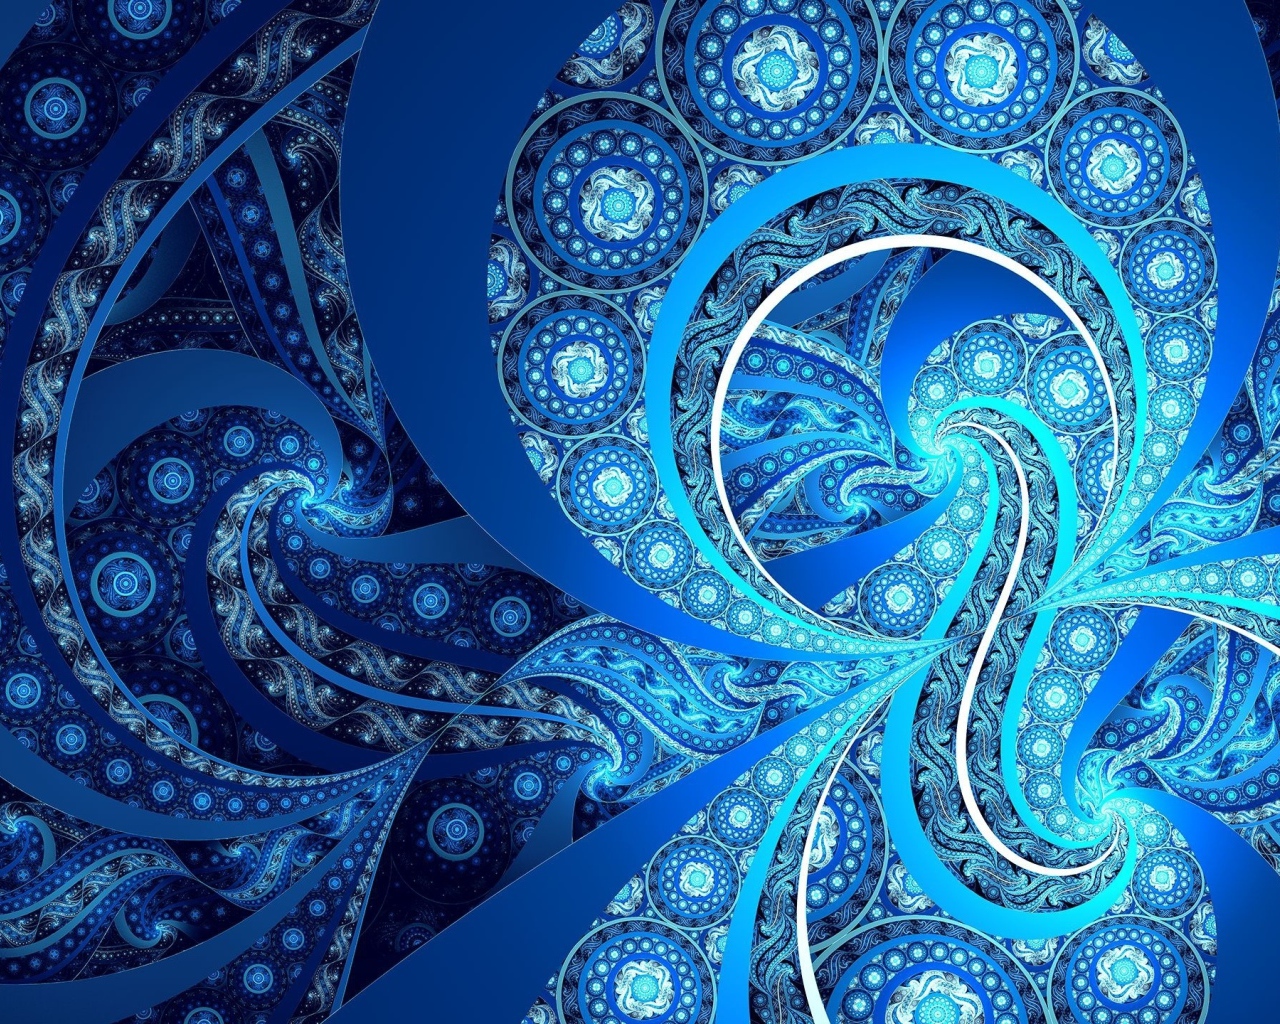 Unusual blue fractal patterns